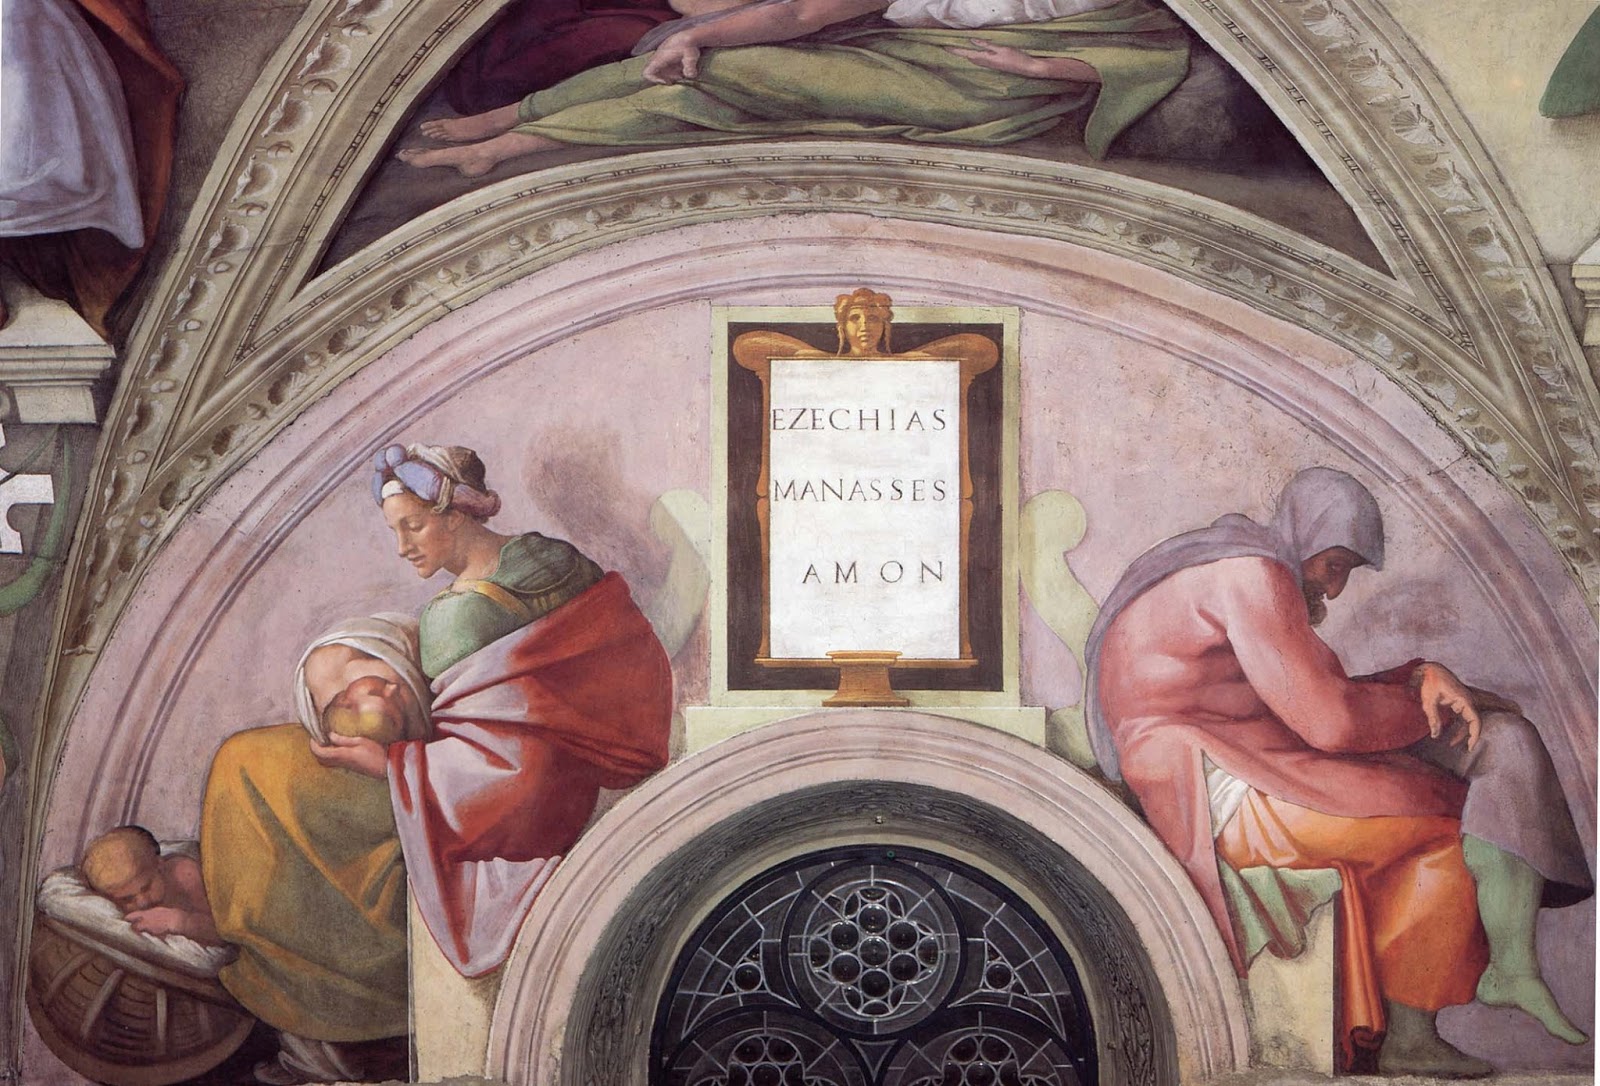 Michelangelo+Buonarroti-1475-1564 (274).jpg